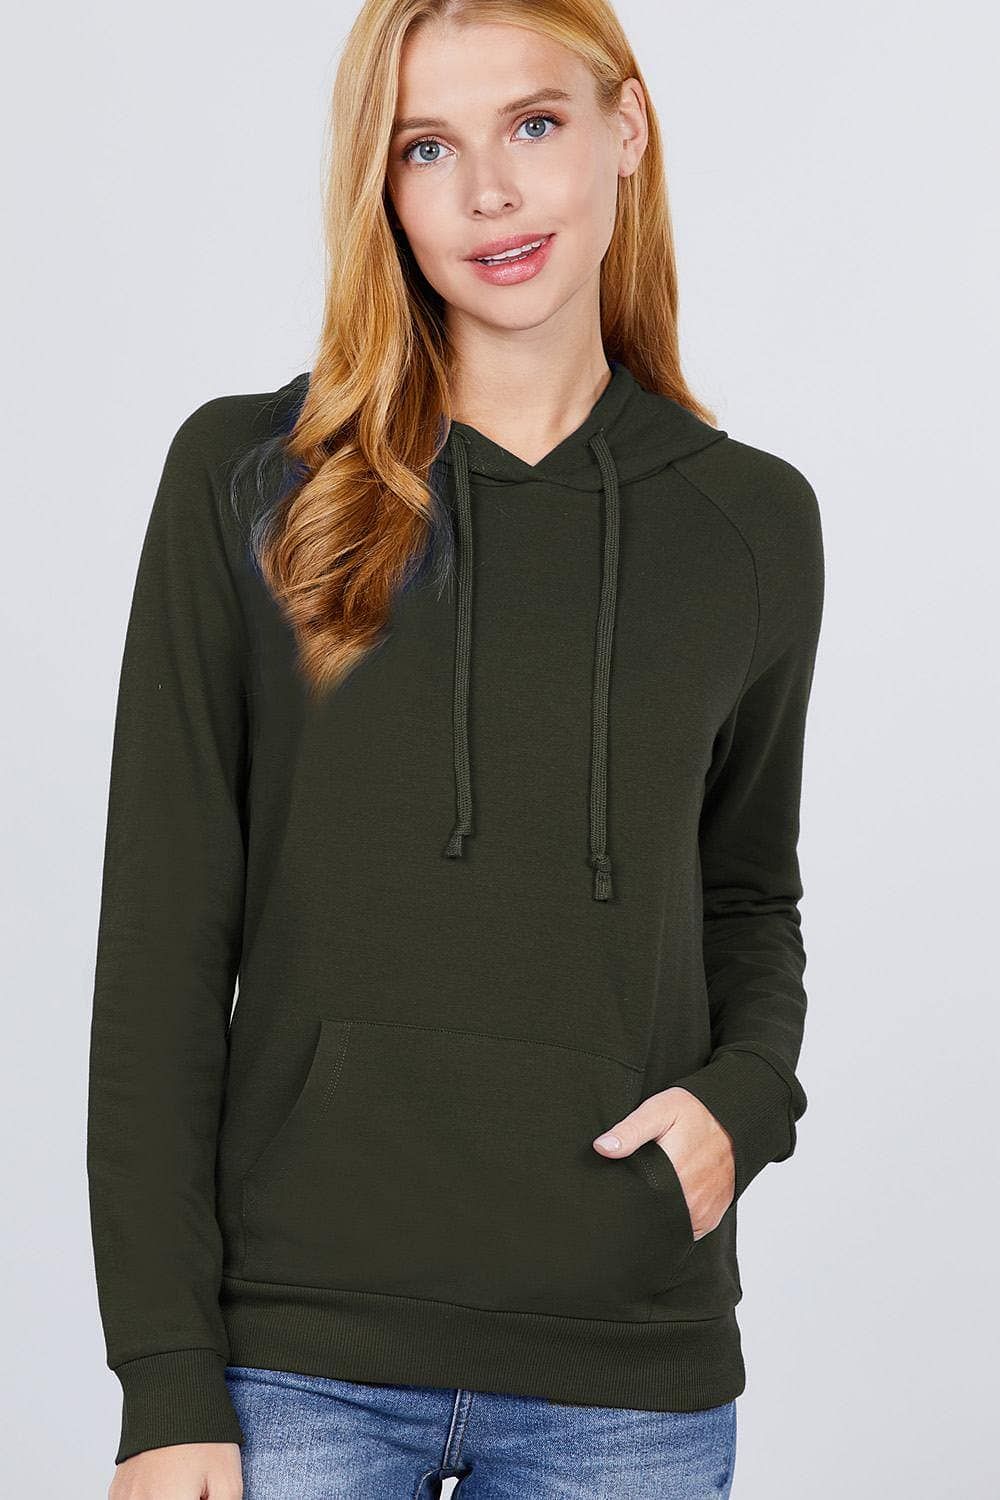 Dark Olive French Terry Long Sleeve Sweatshirt - Shopping Therapy S Sweatshirt